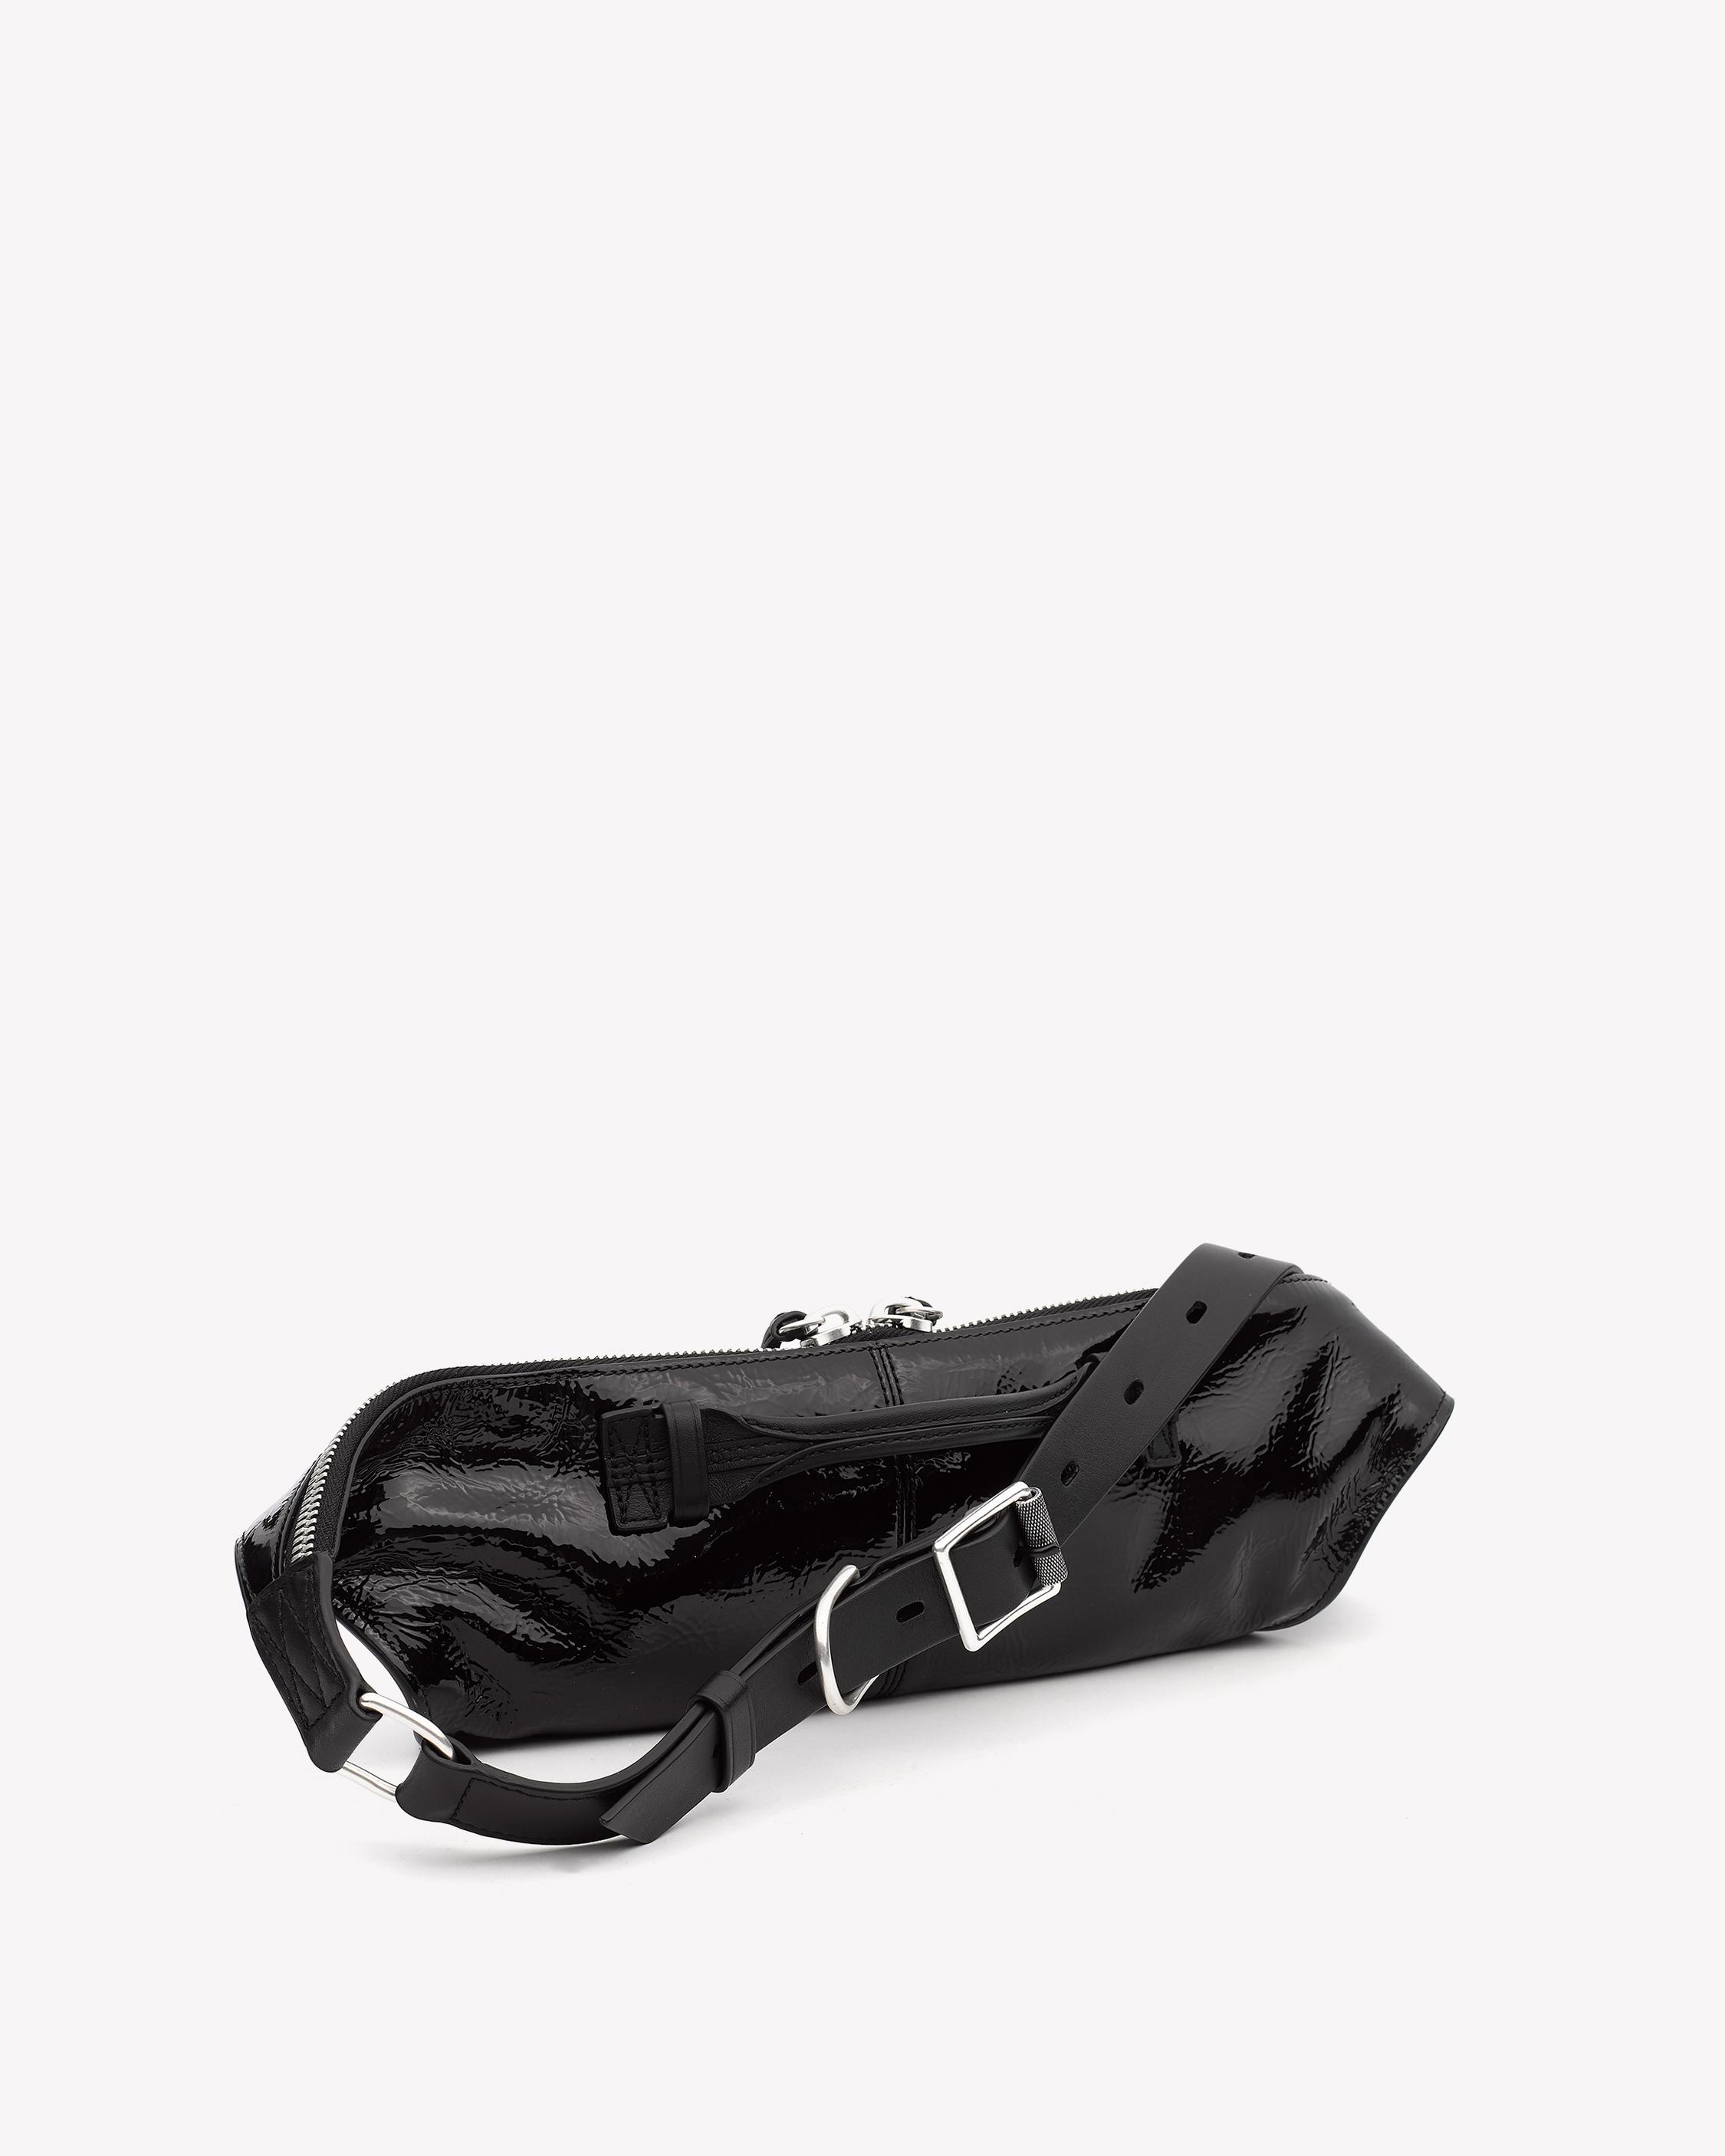 John Elliott Leather Modular Waist Bag / Ivory